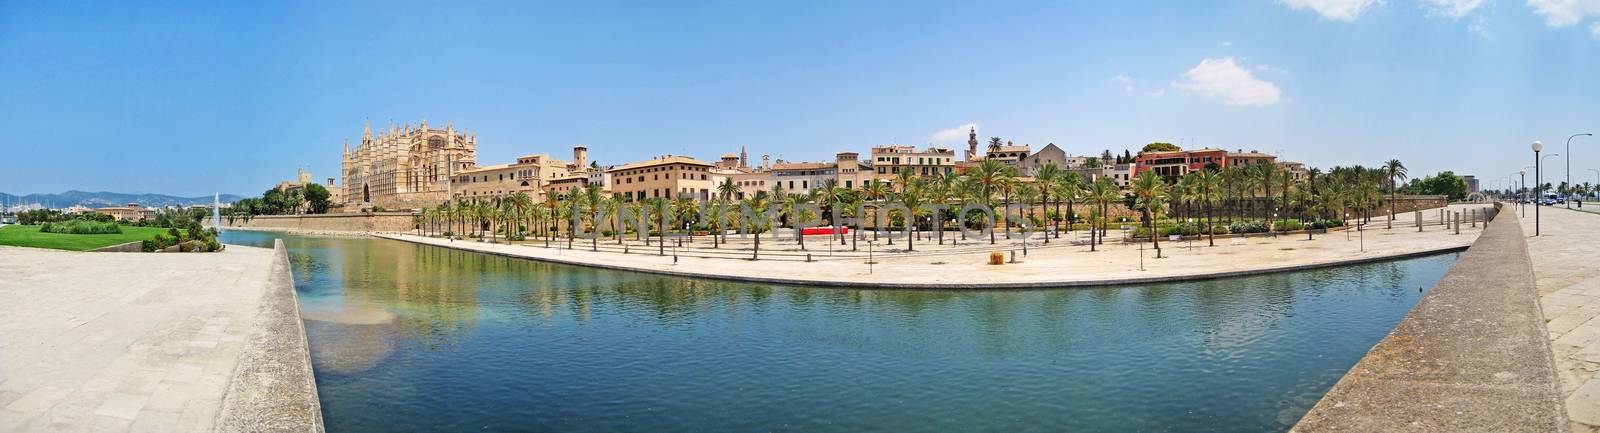 La Seu panorama, Palma de Majorca by aldorado